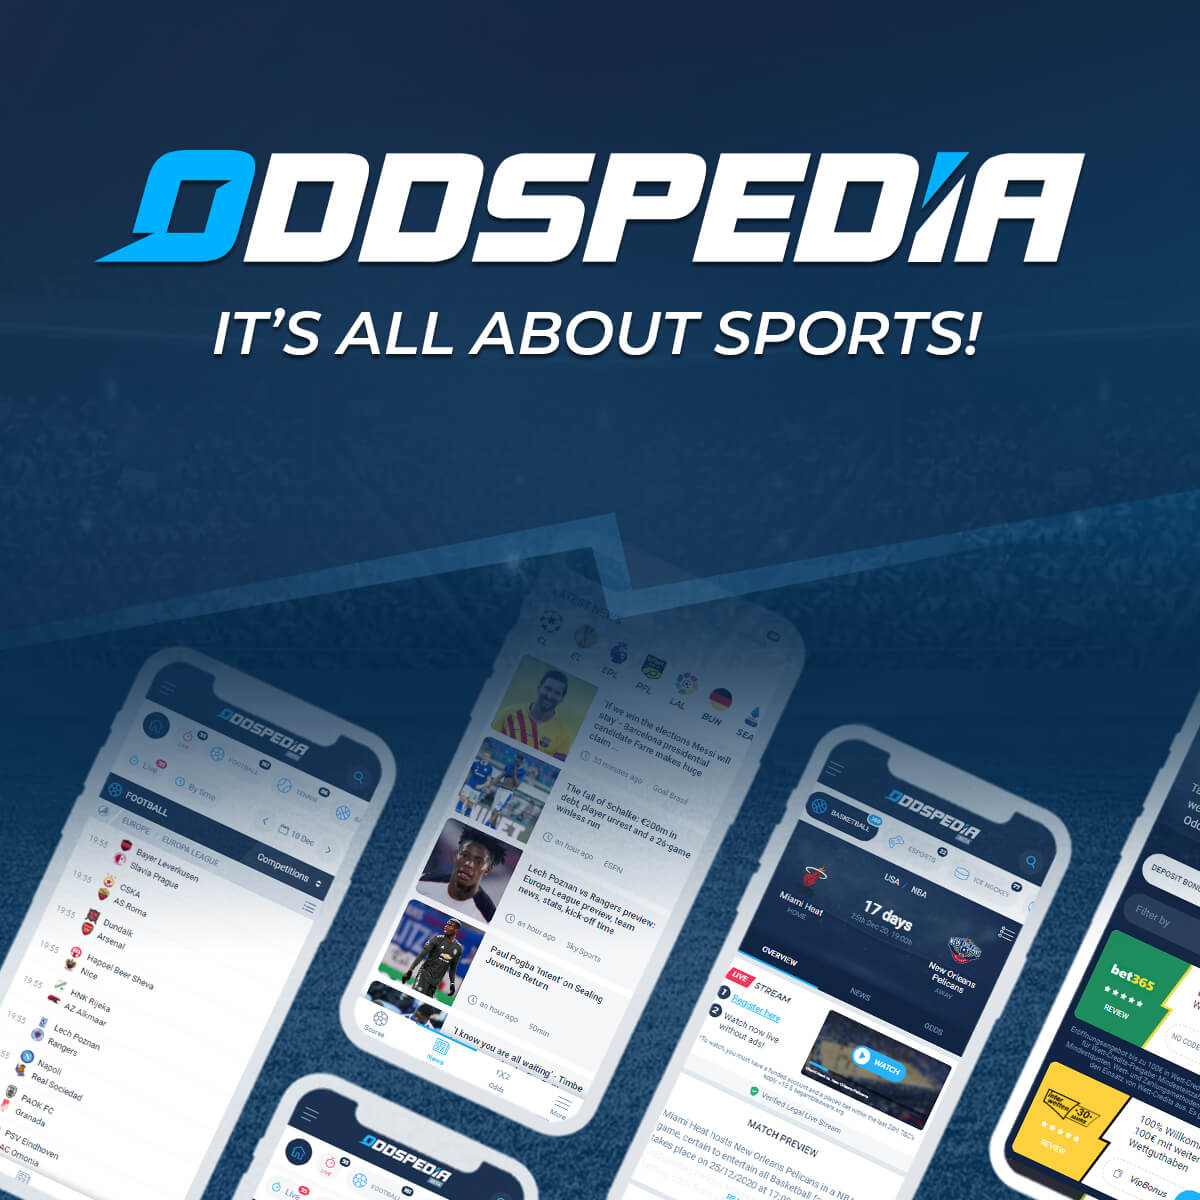 live tennis scores api for apps